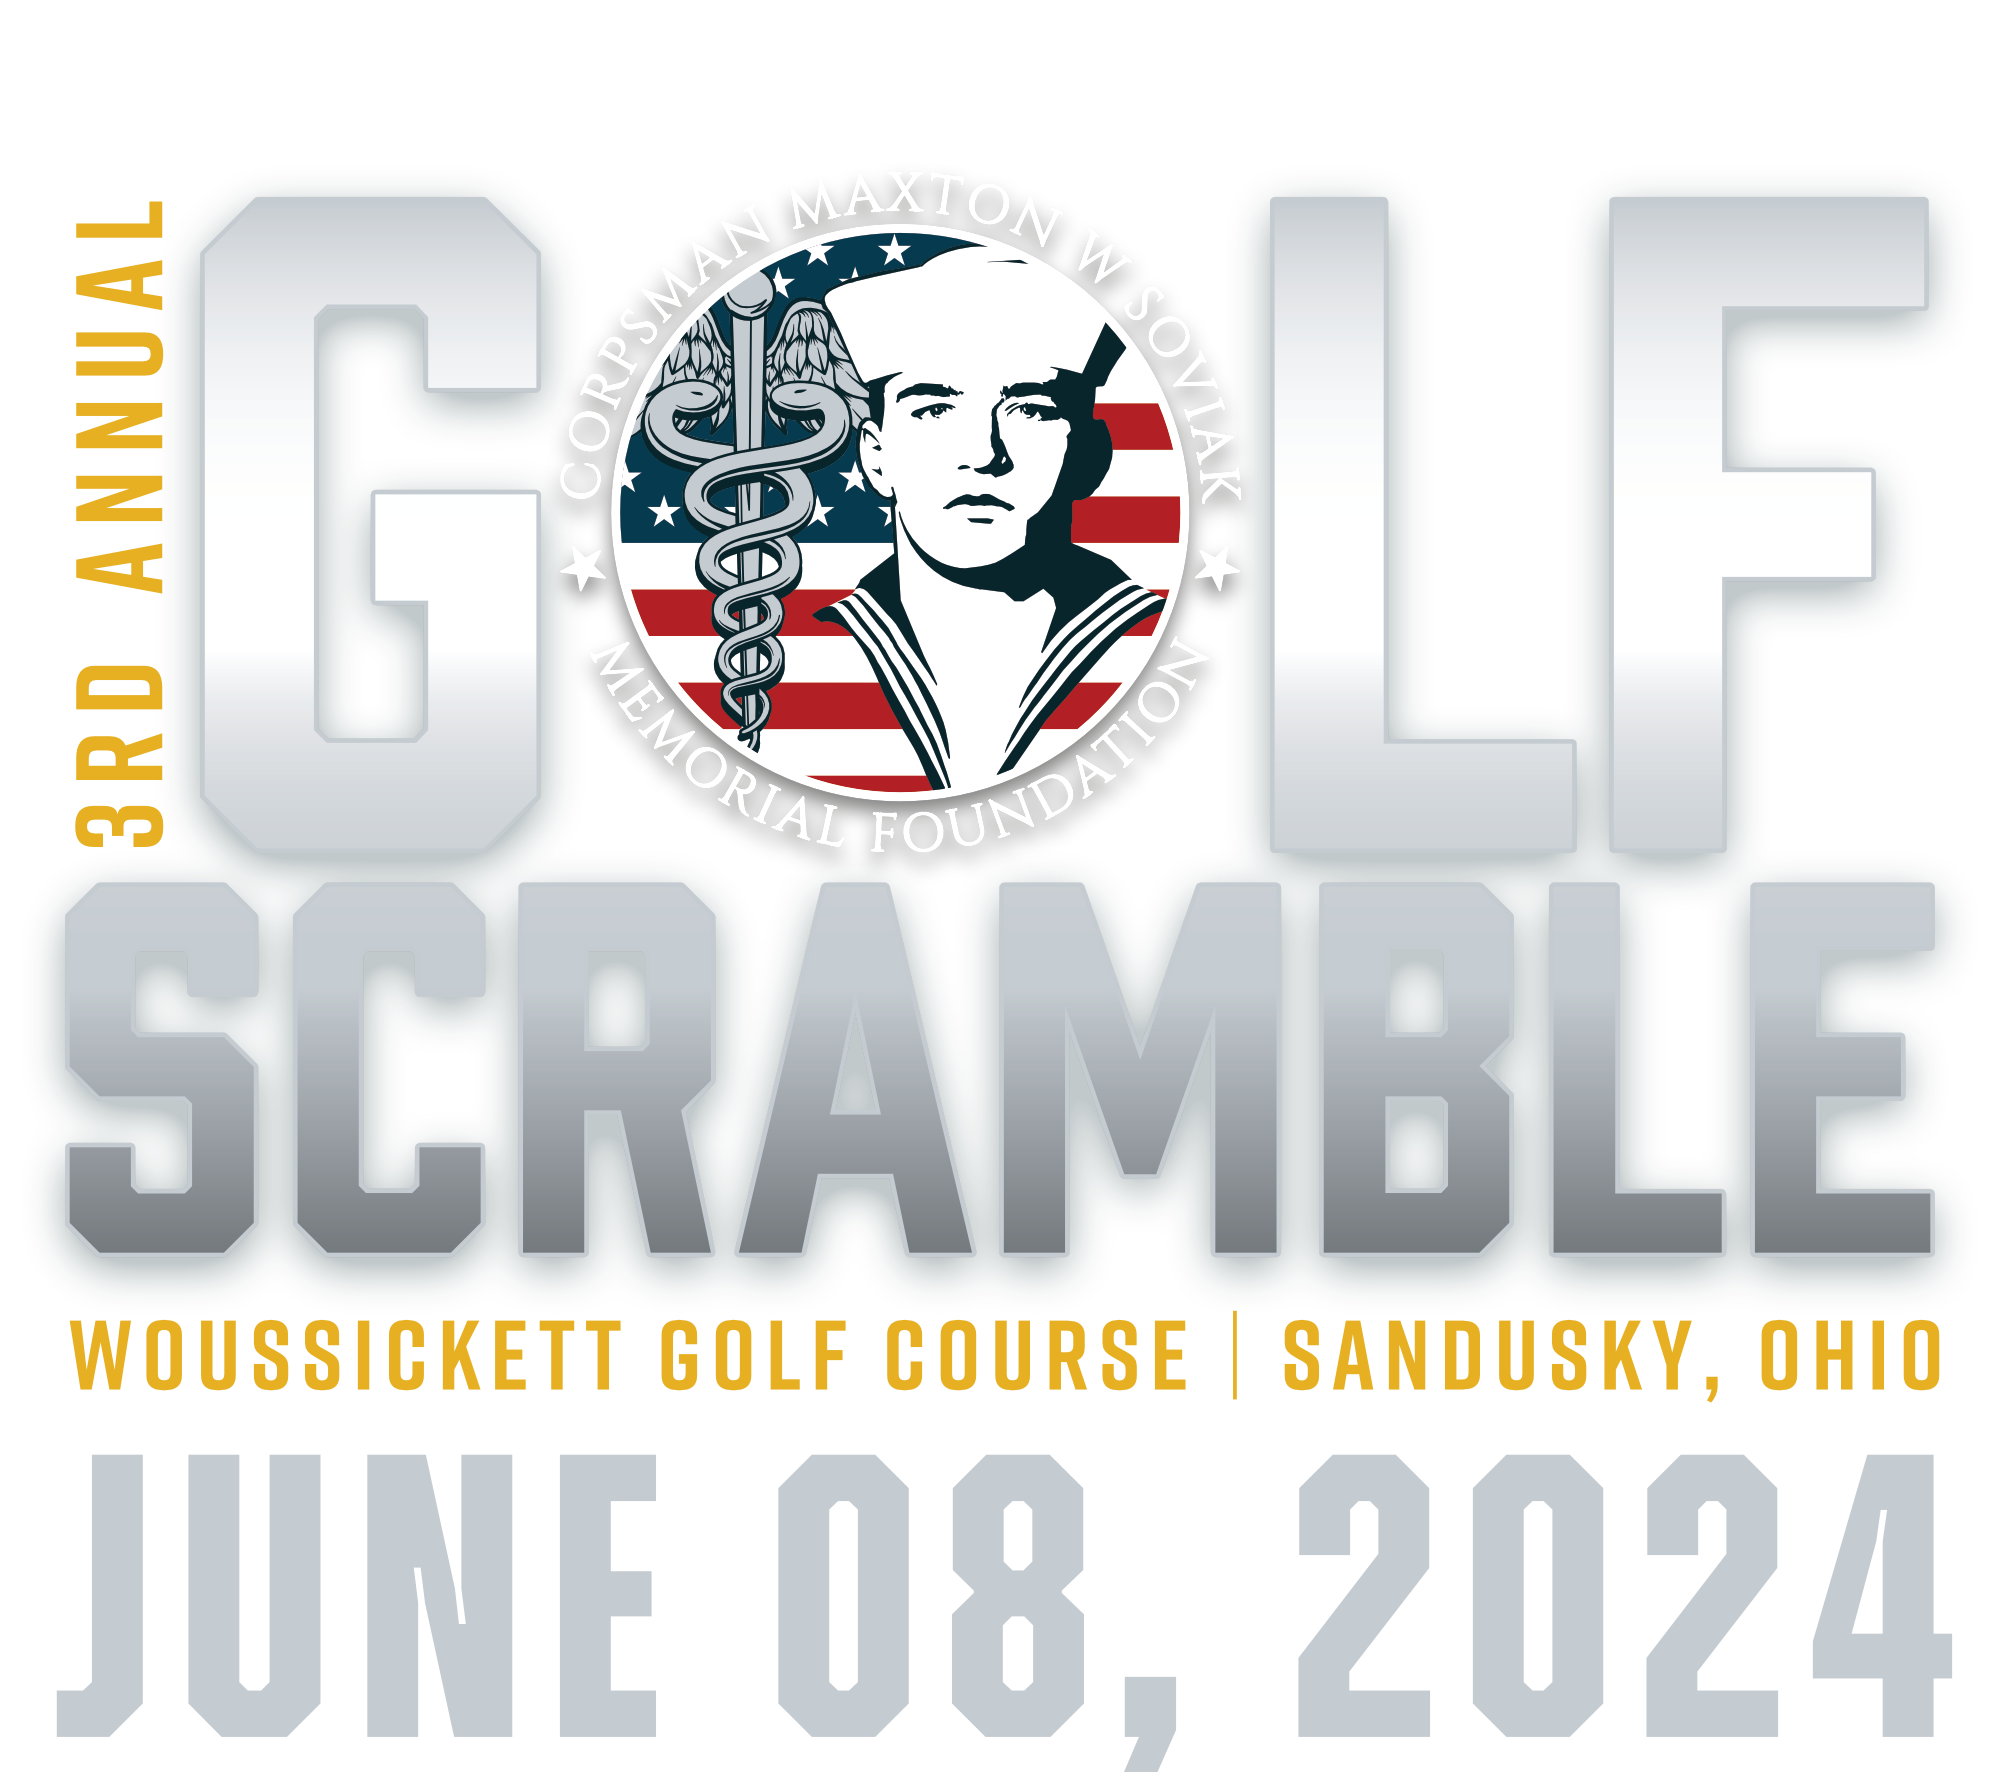 3rd Annual Corpsman Maxton W Soviak Memorial Foundation GOlf Scramble. Woussickett Golf Course, Sandusky Ohio - June 8th, 2024.